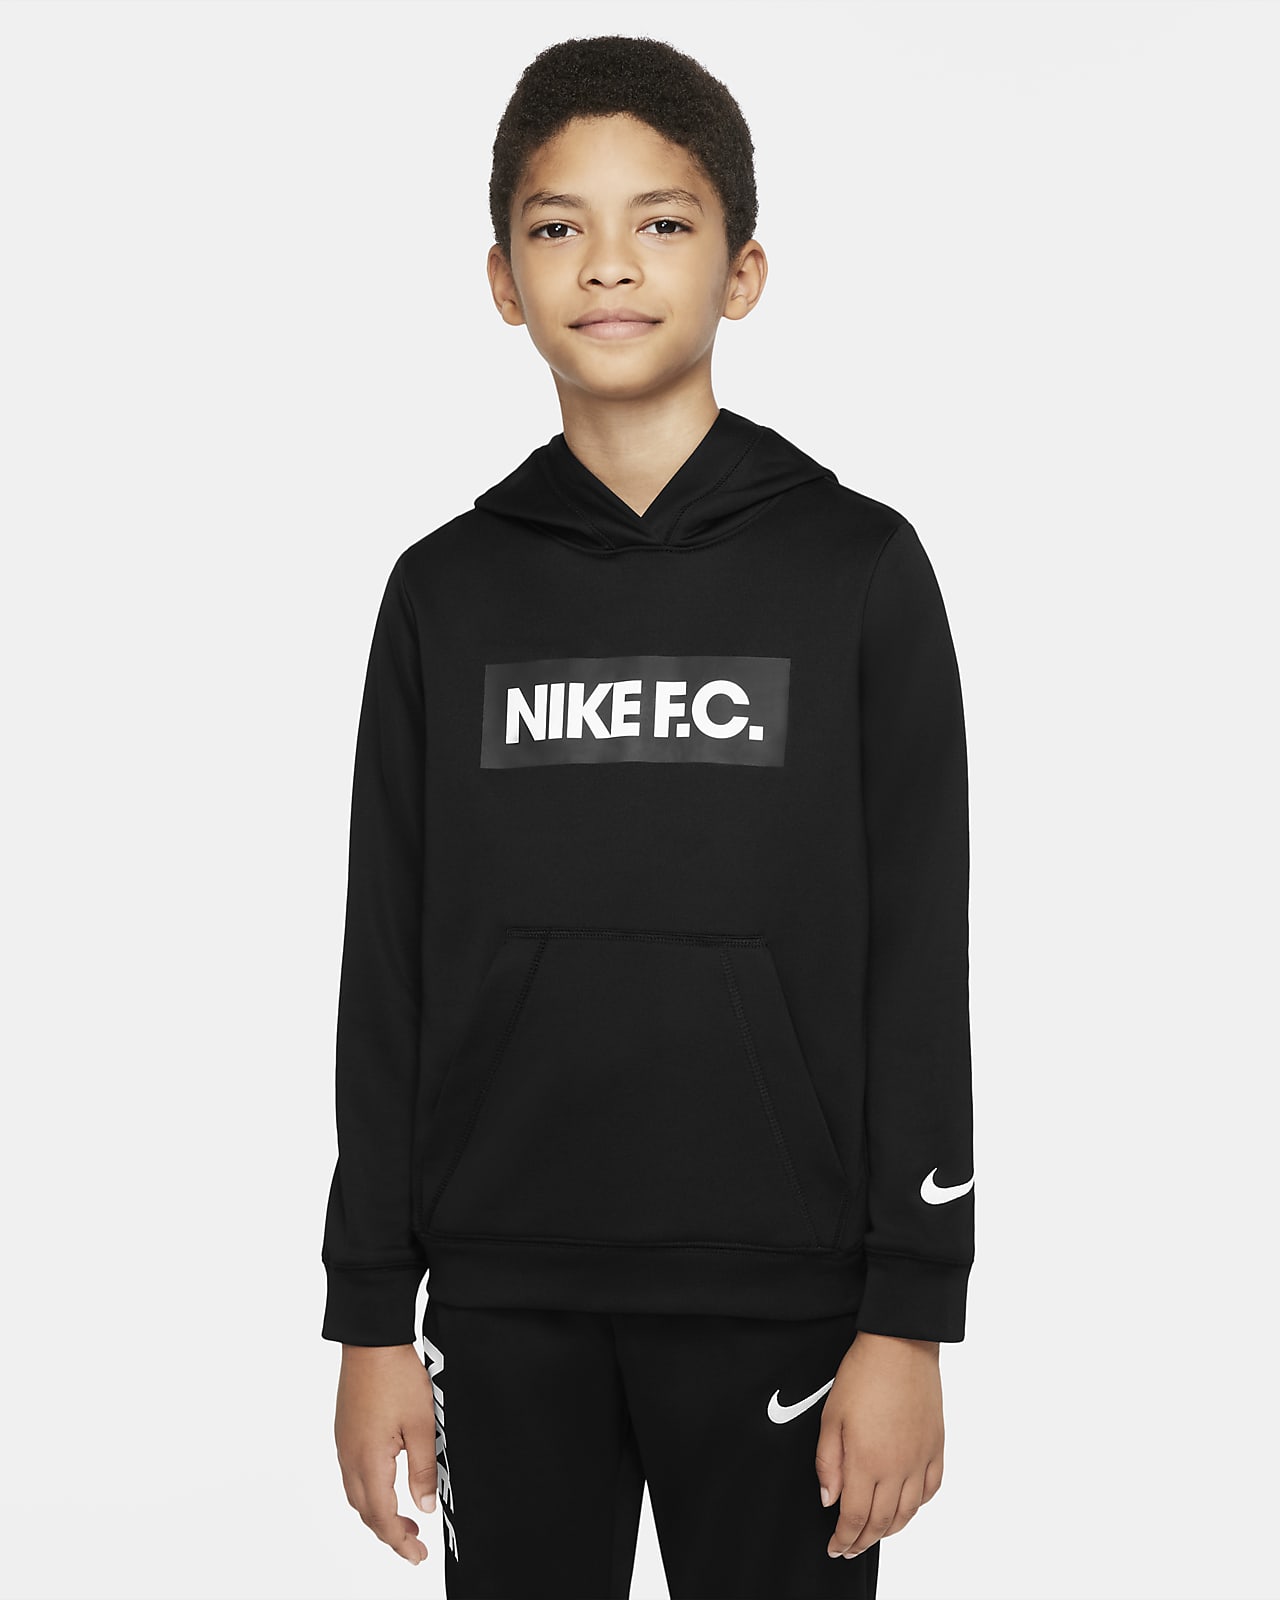 Nike F.C. Fußball-Hoodie für ältere Kinder